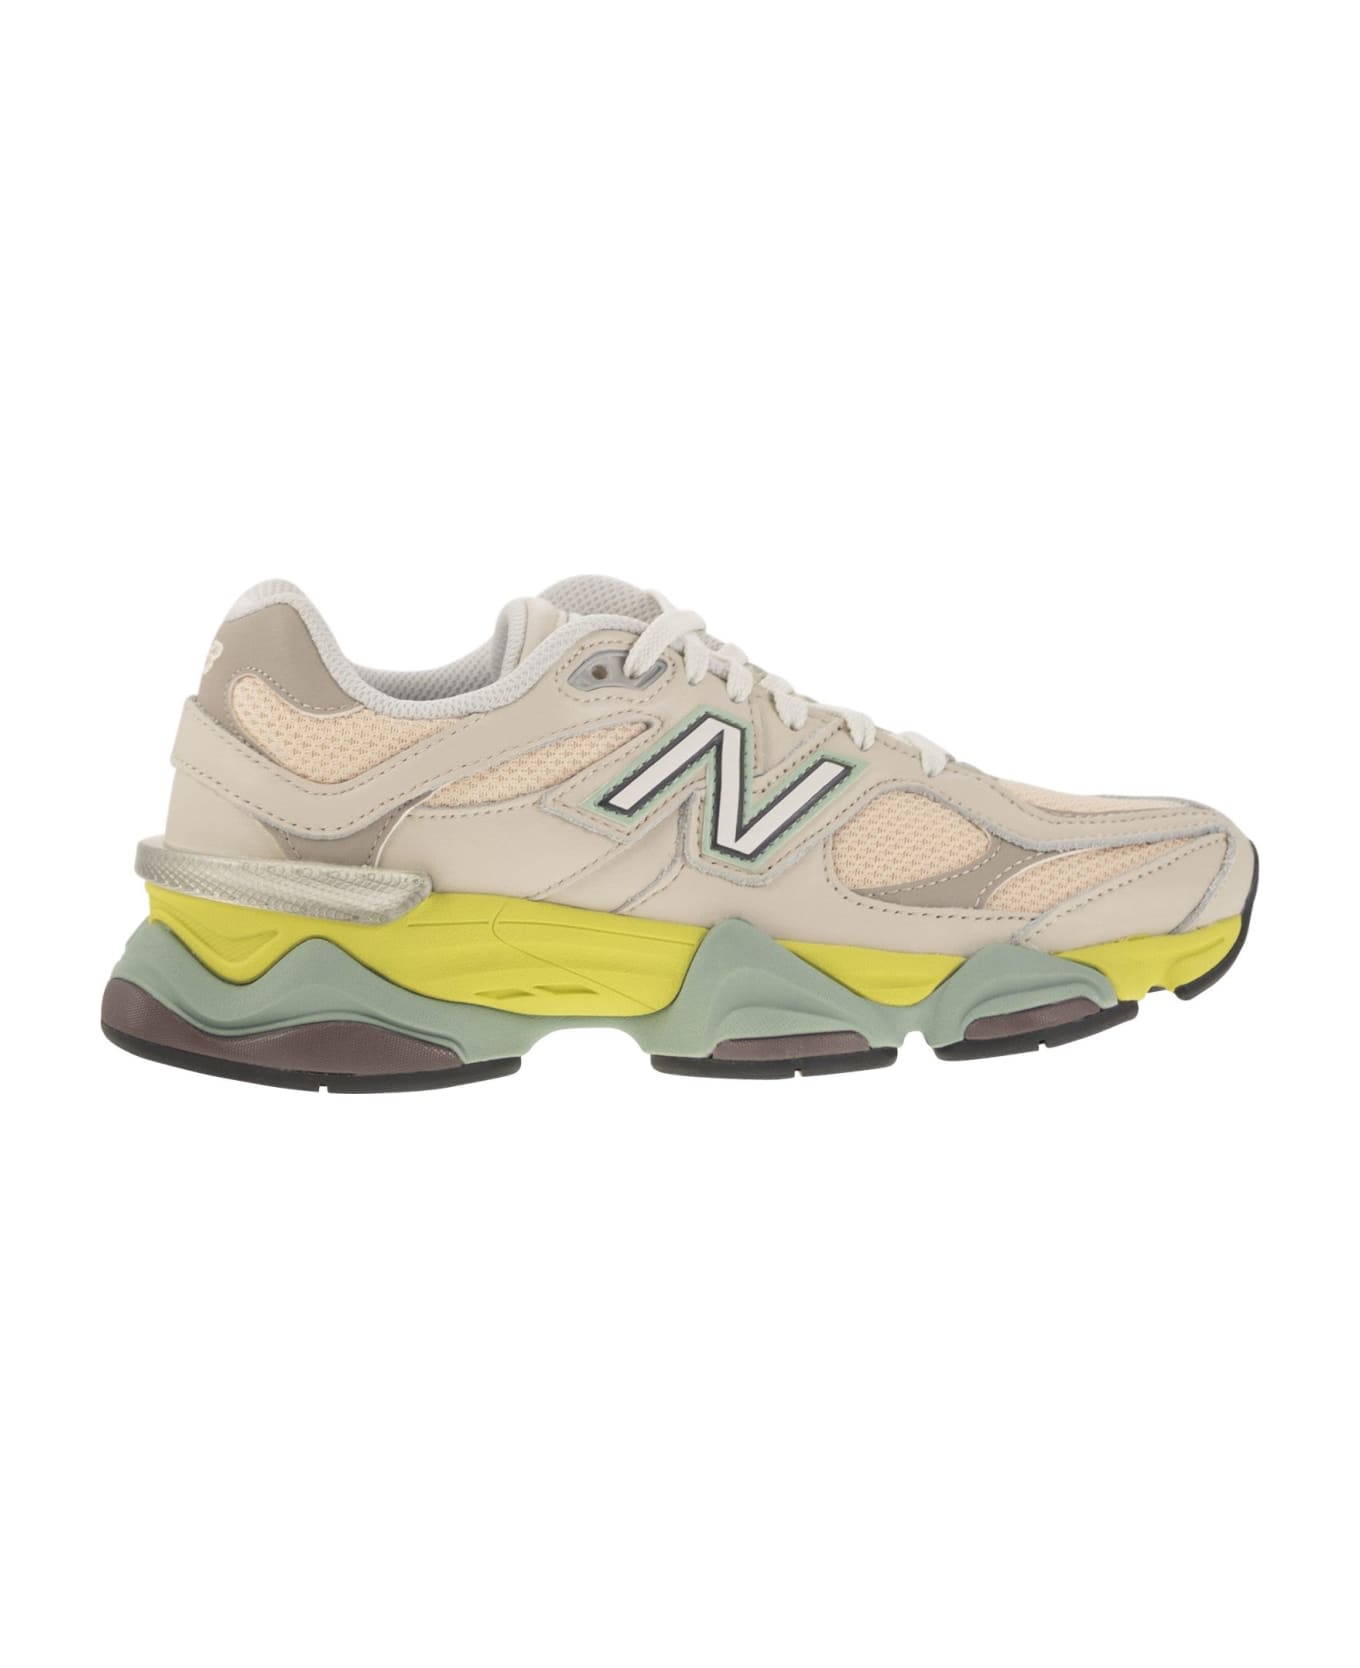 New Balance 9060 - Sneakers - Grey/yellow